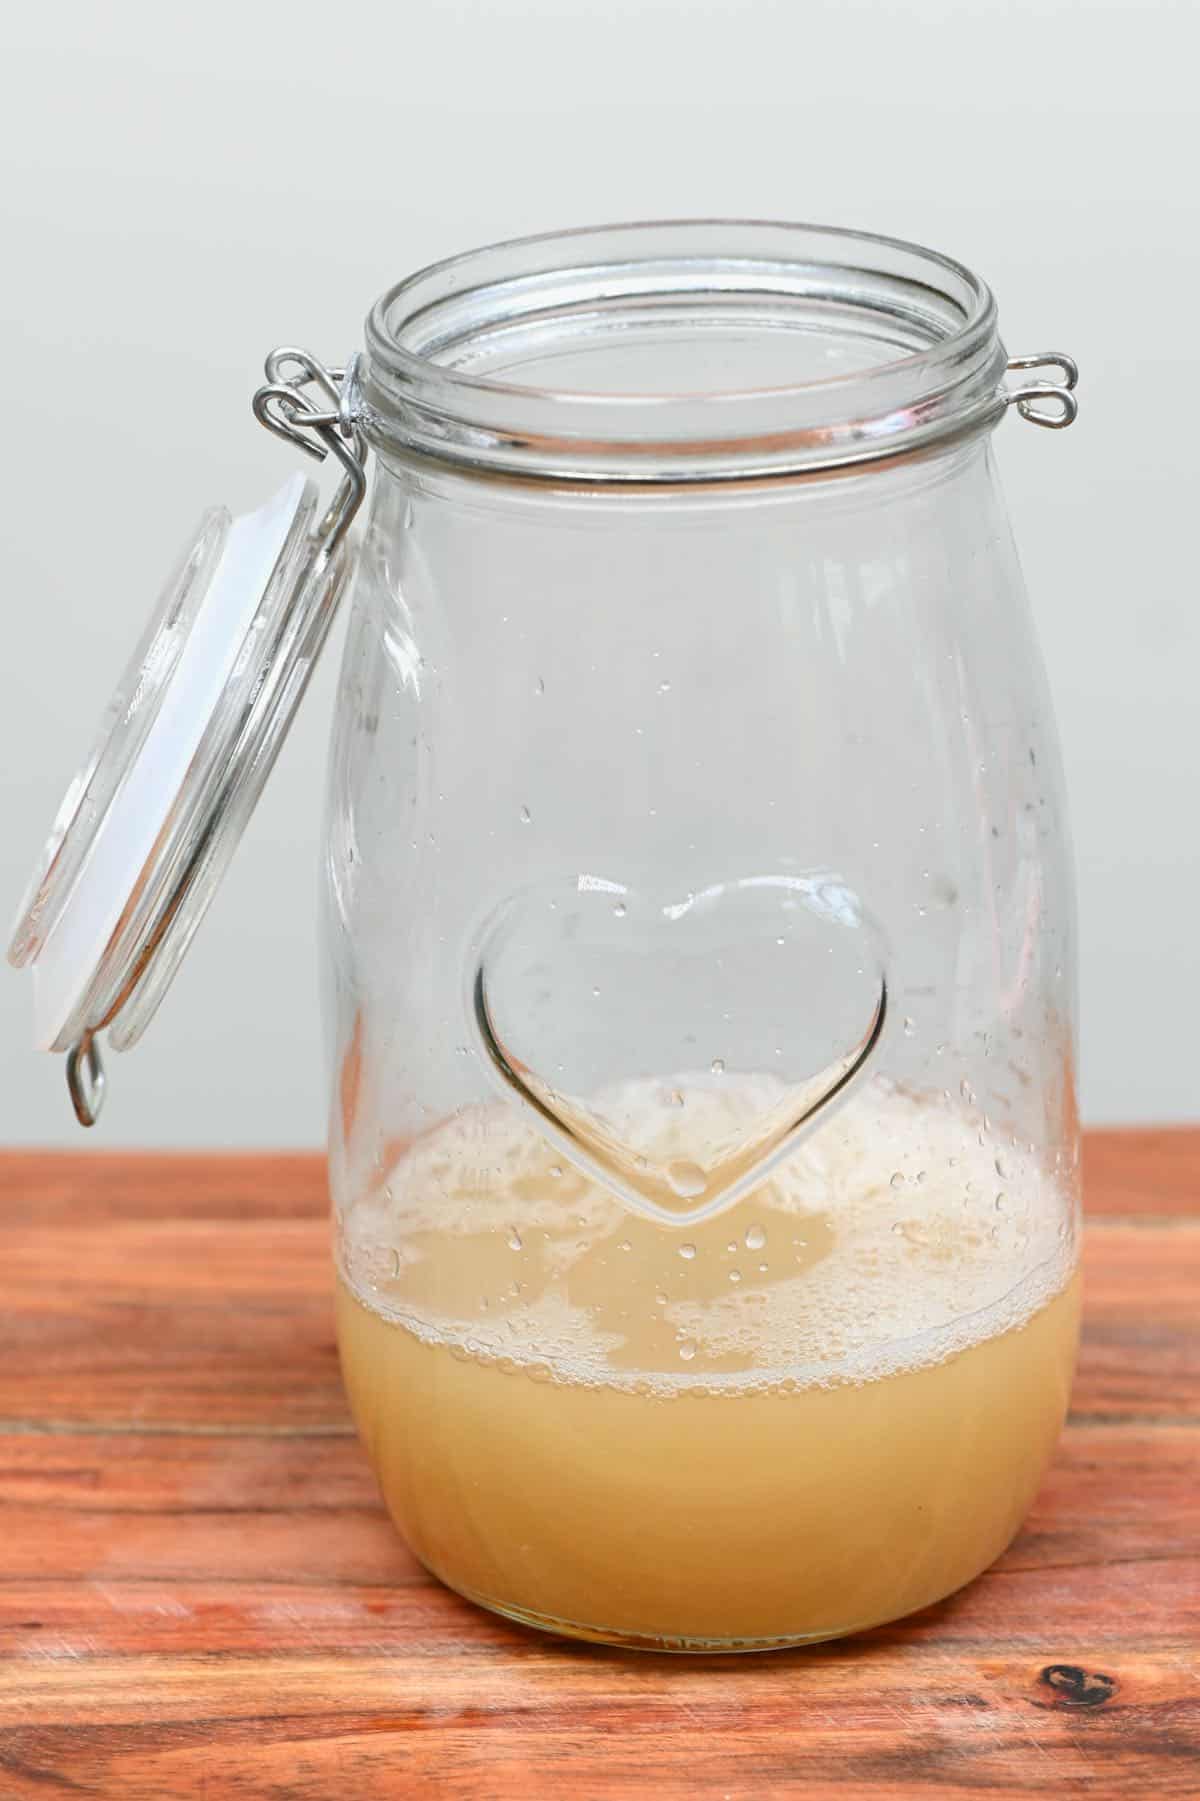 Chickpea liquid in a jar